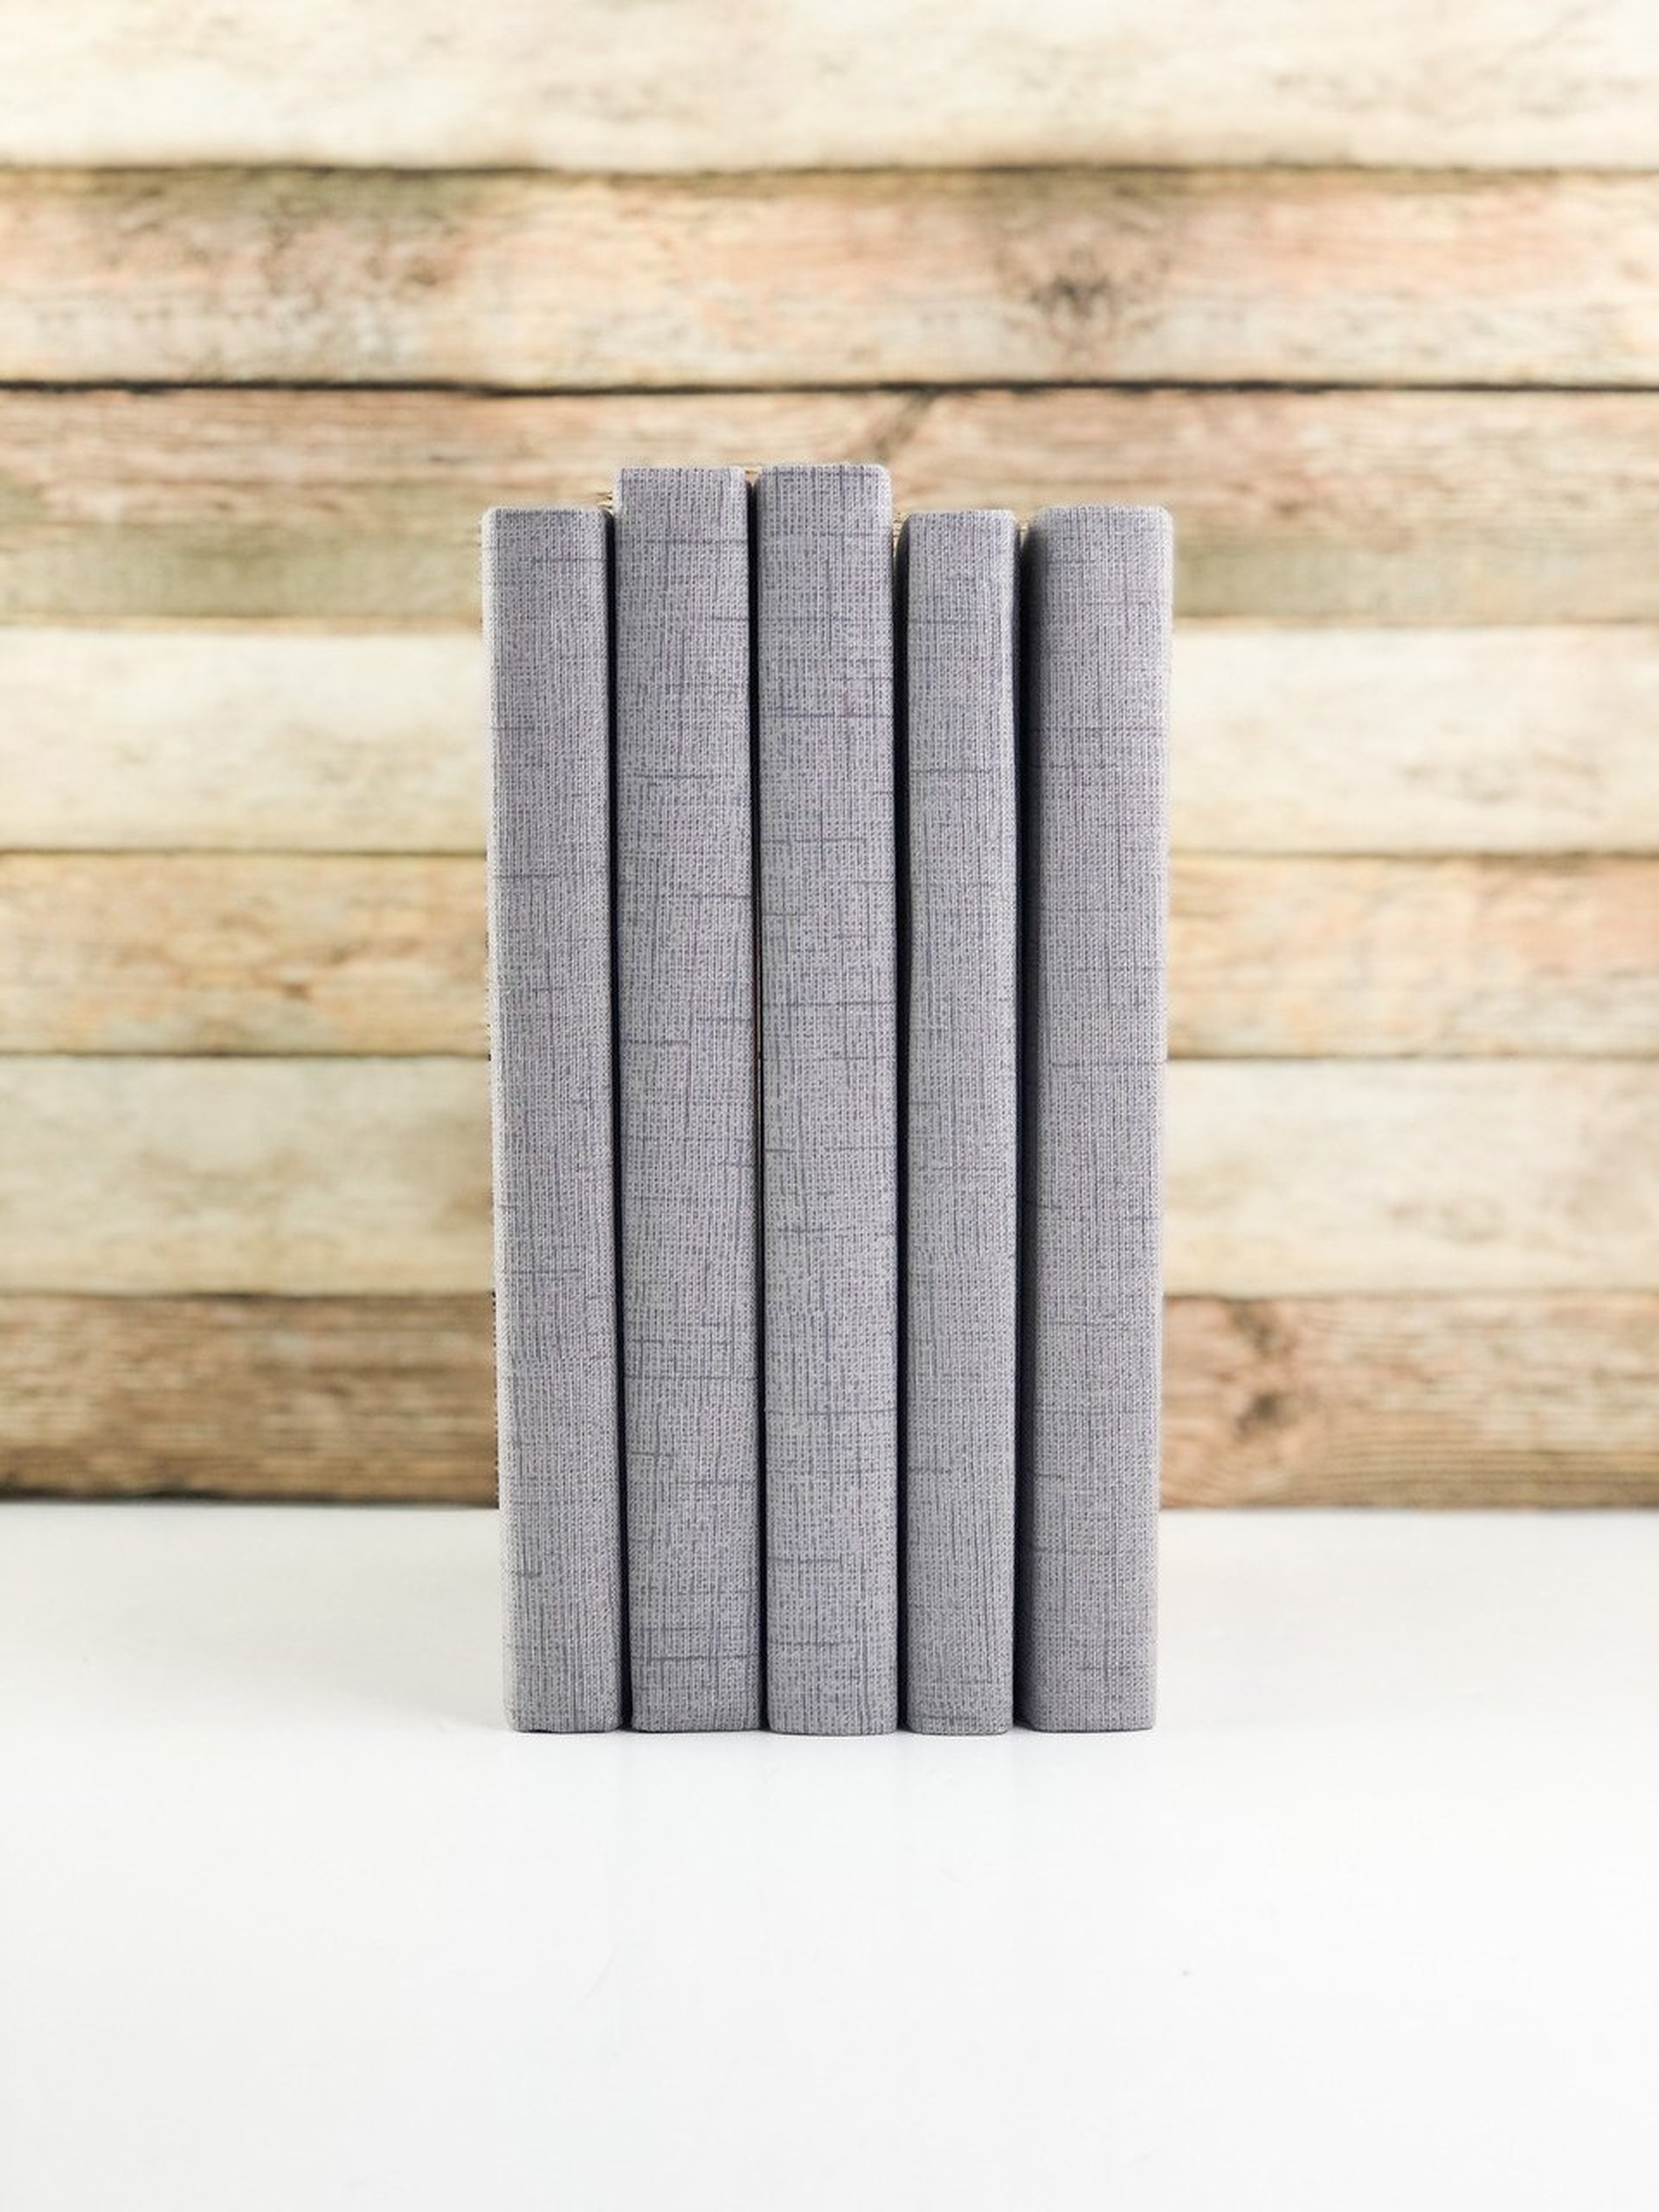 Decorative Books, Textured Gray, Set of 5 - Havenly Essentials